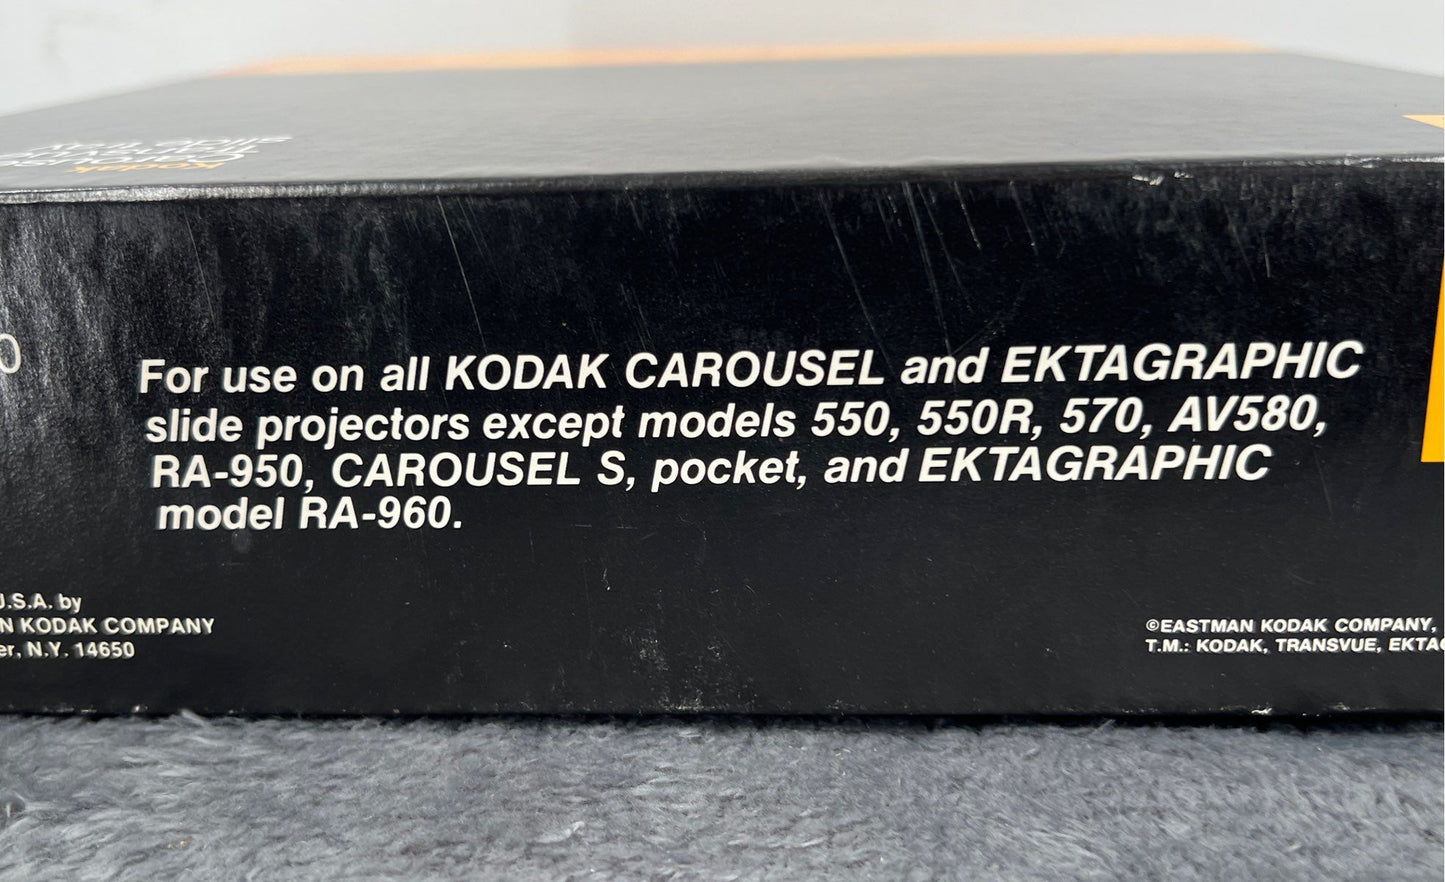 Vintage 1983 Kodak Carousel Transvue 140 Slide Tray-B140T-Set Of 2-Original Box